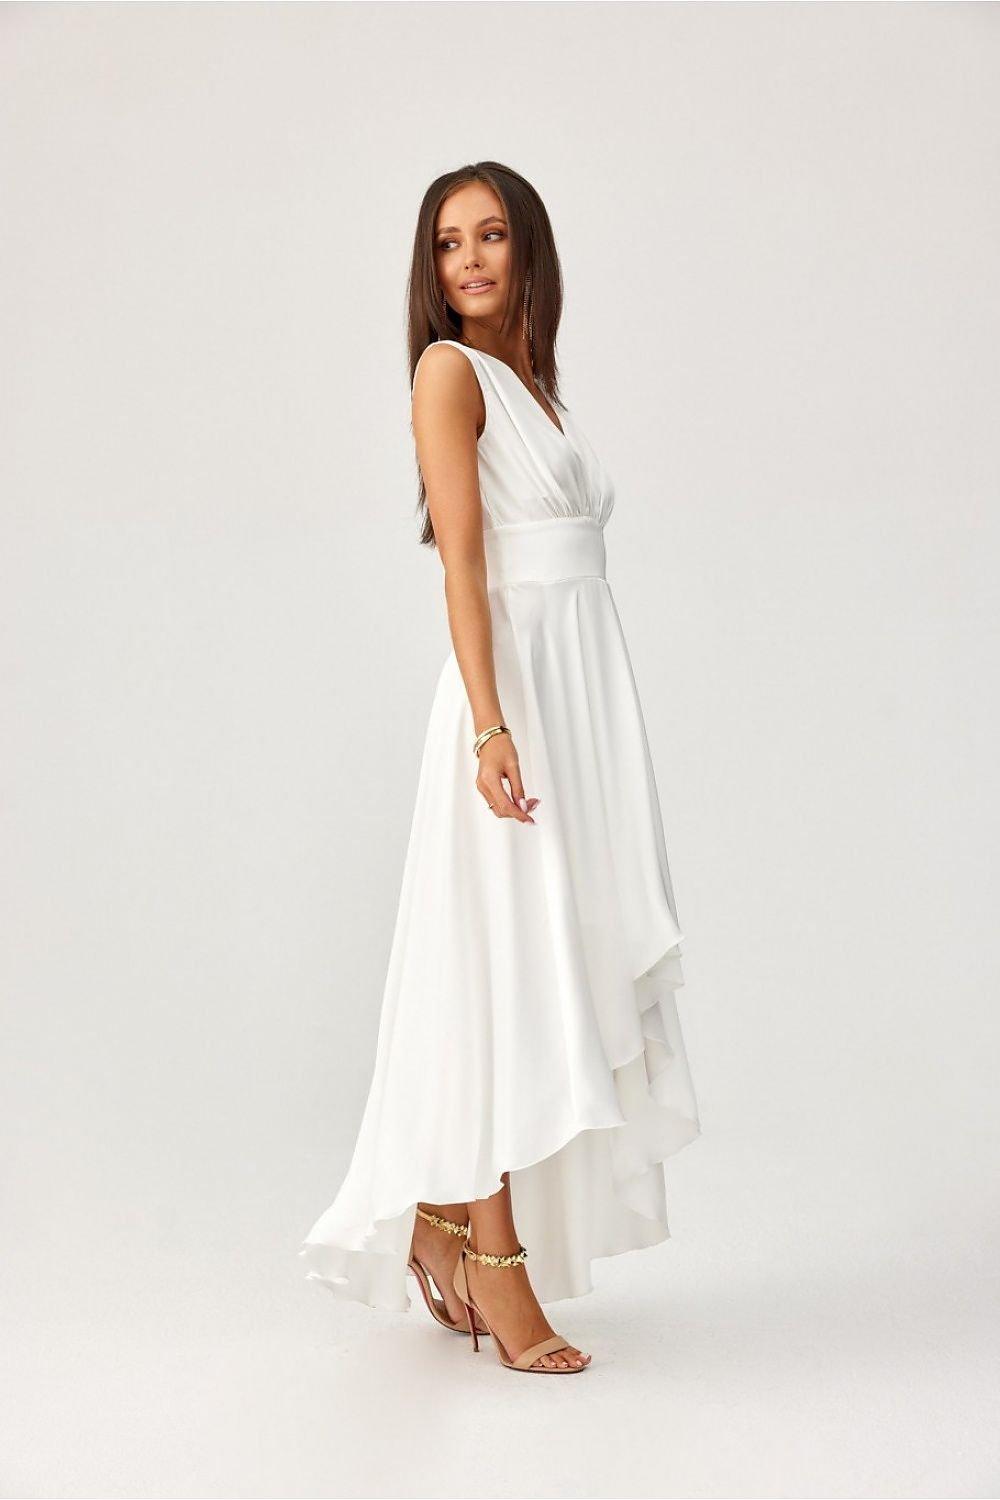 Evening dress model 186631 Roco Fashion - Lucianne Boutique